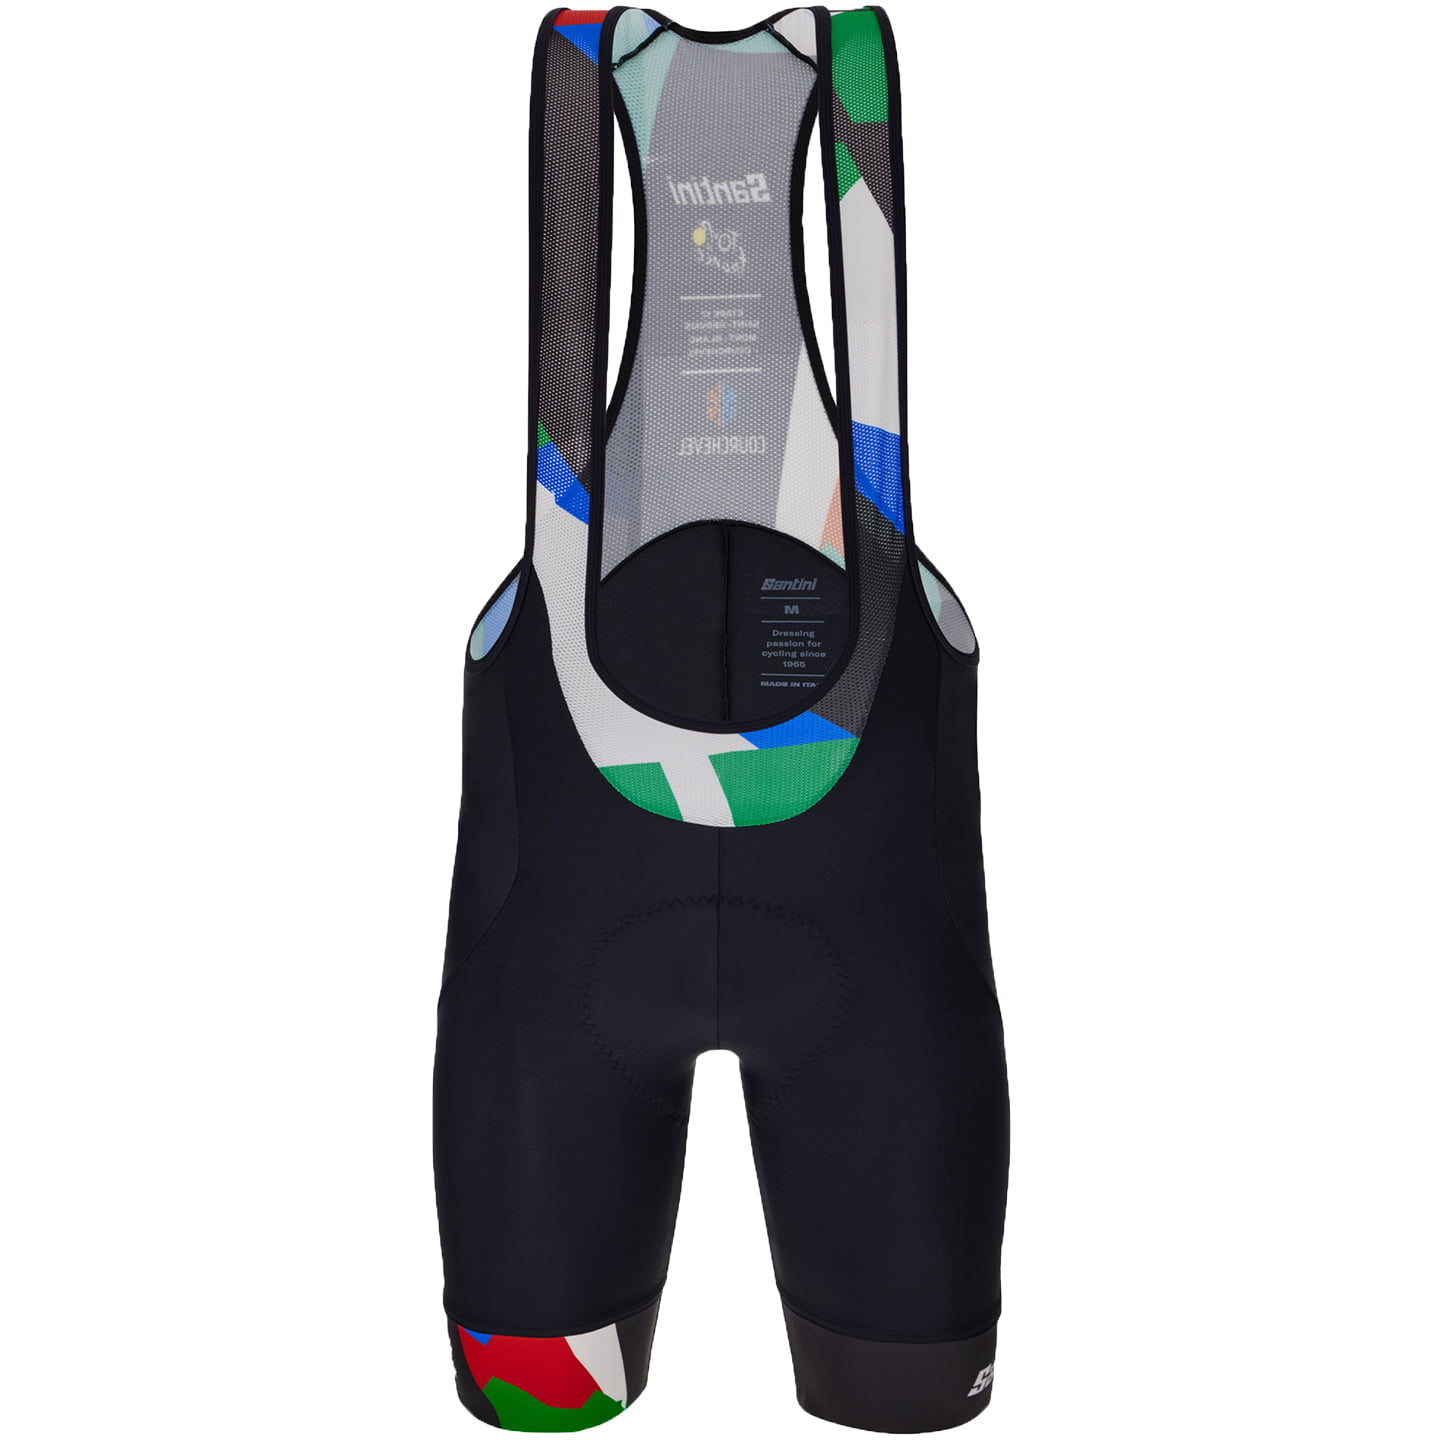 TOUR DE FRANCE Bib Shorts Mont Blanc-Courchevel 2023, for men, size L, Cycle shorts, Cycling clothing